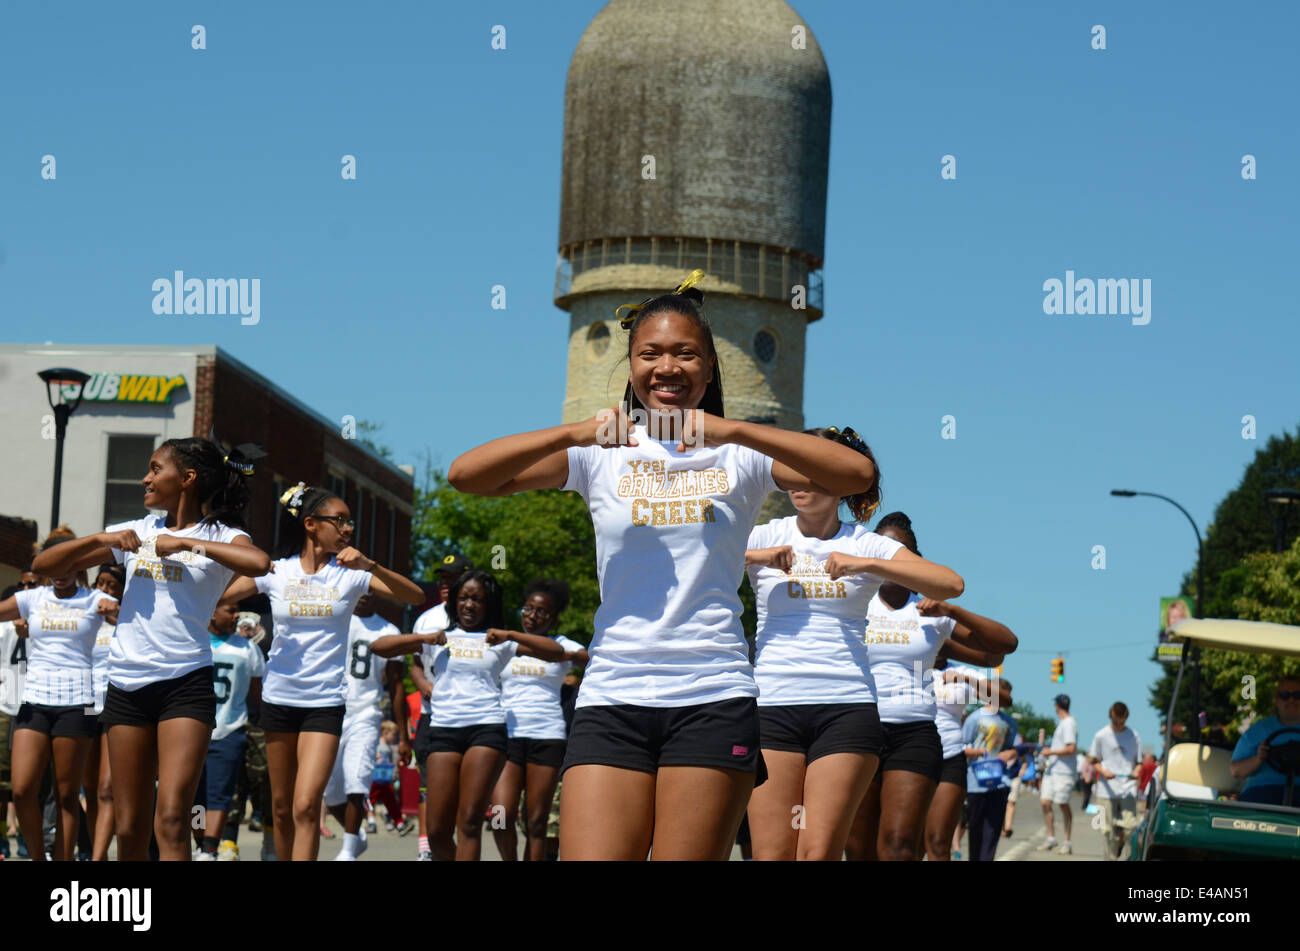 YPSILANTI, MI - JULY 4: Ypsilanti high school cheer team members at the 4th of July parade on July 4, 2014 in Ypsilanti, MI. Stock Photo